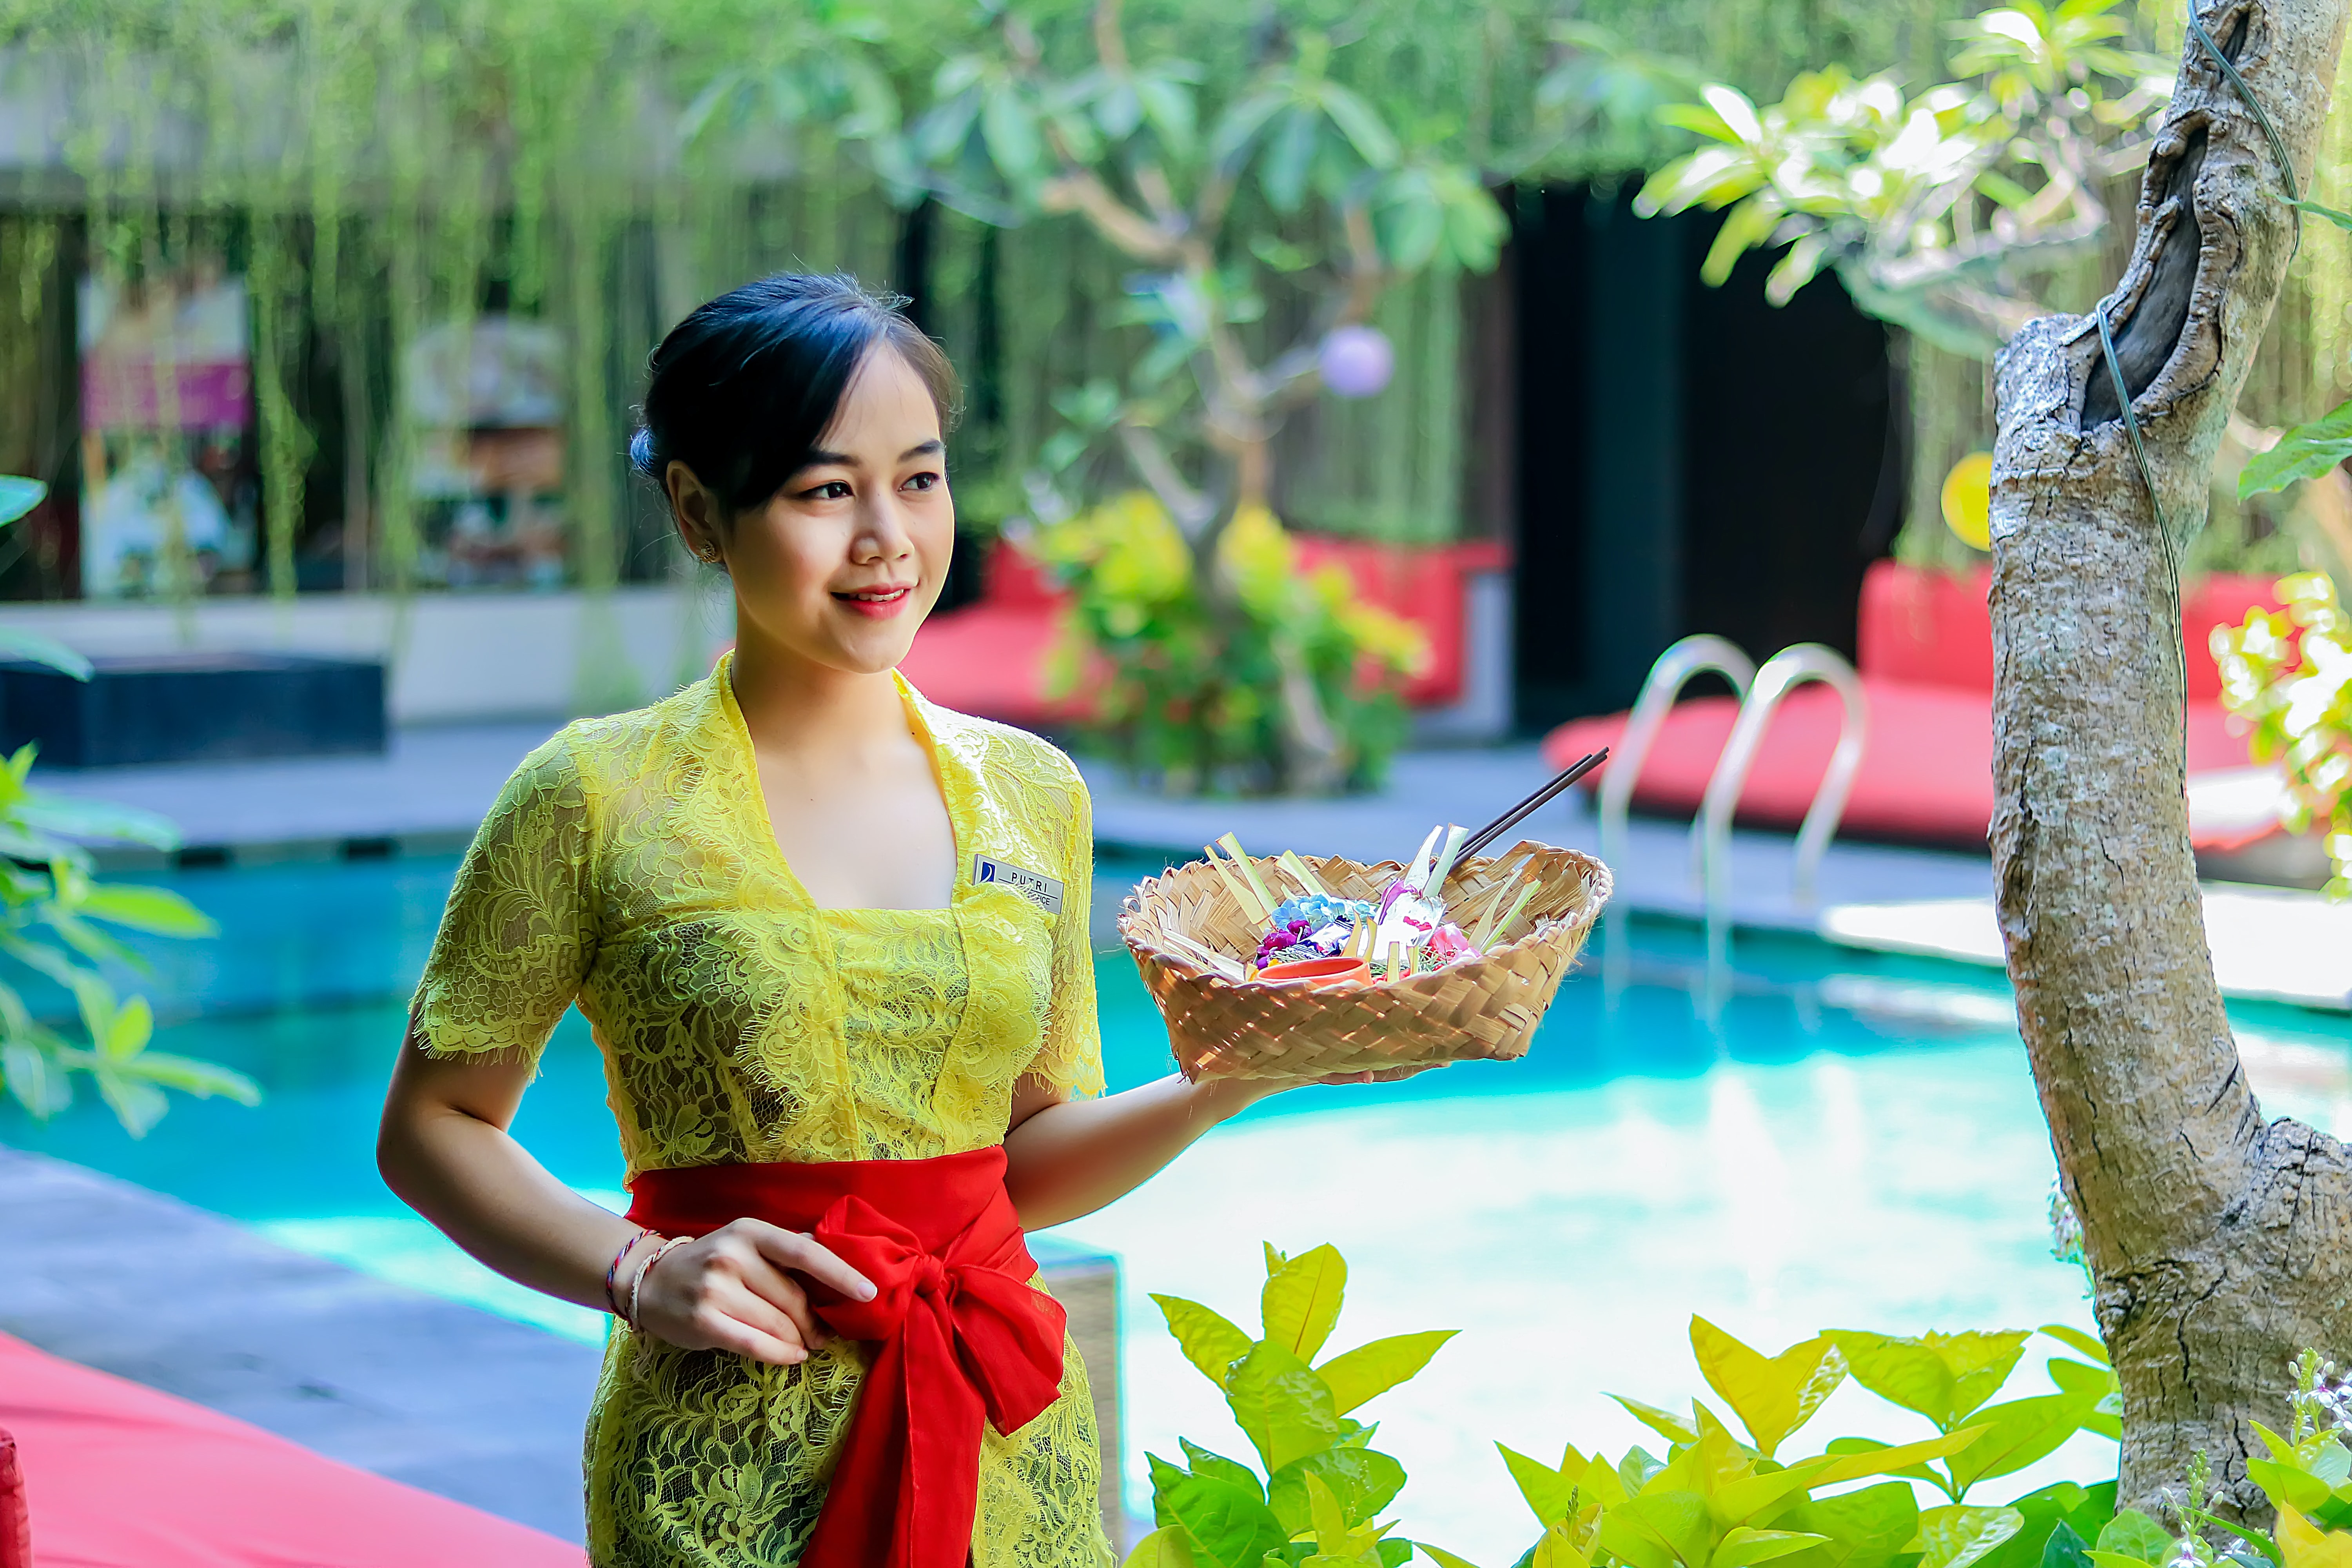 Budget Hotels in Bali